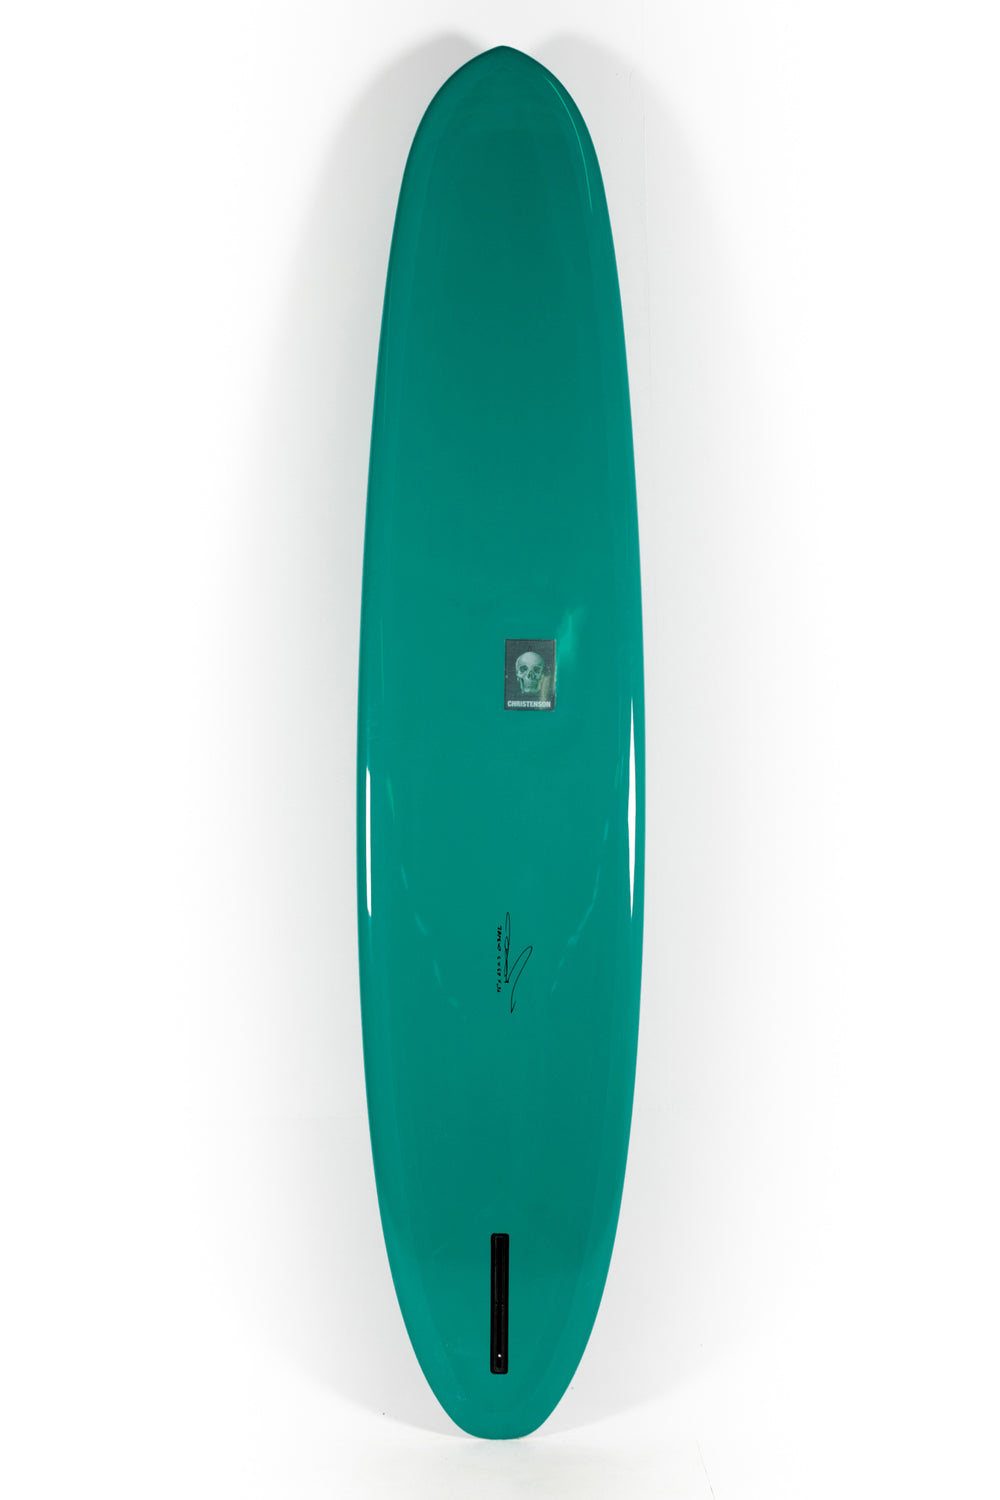 Christenson Surfboard - BANDITO by Chris Christenson - 9'6” x 23 x 